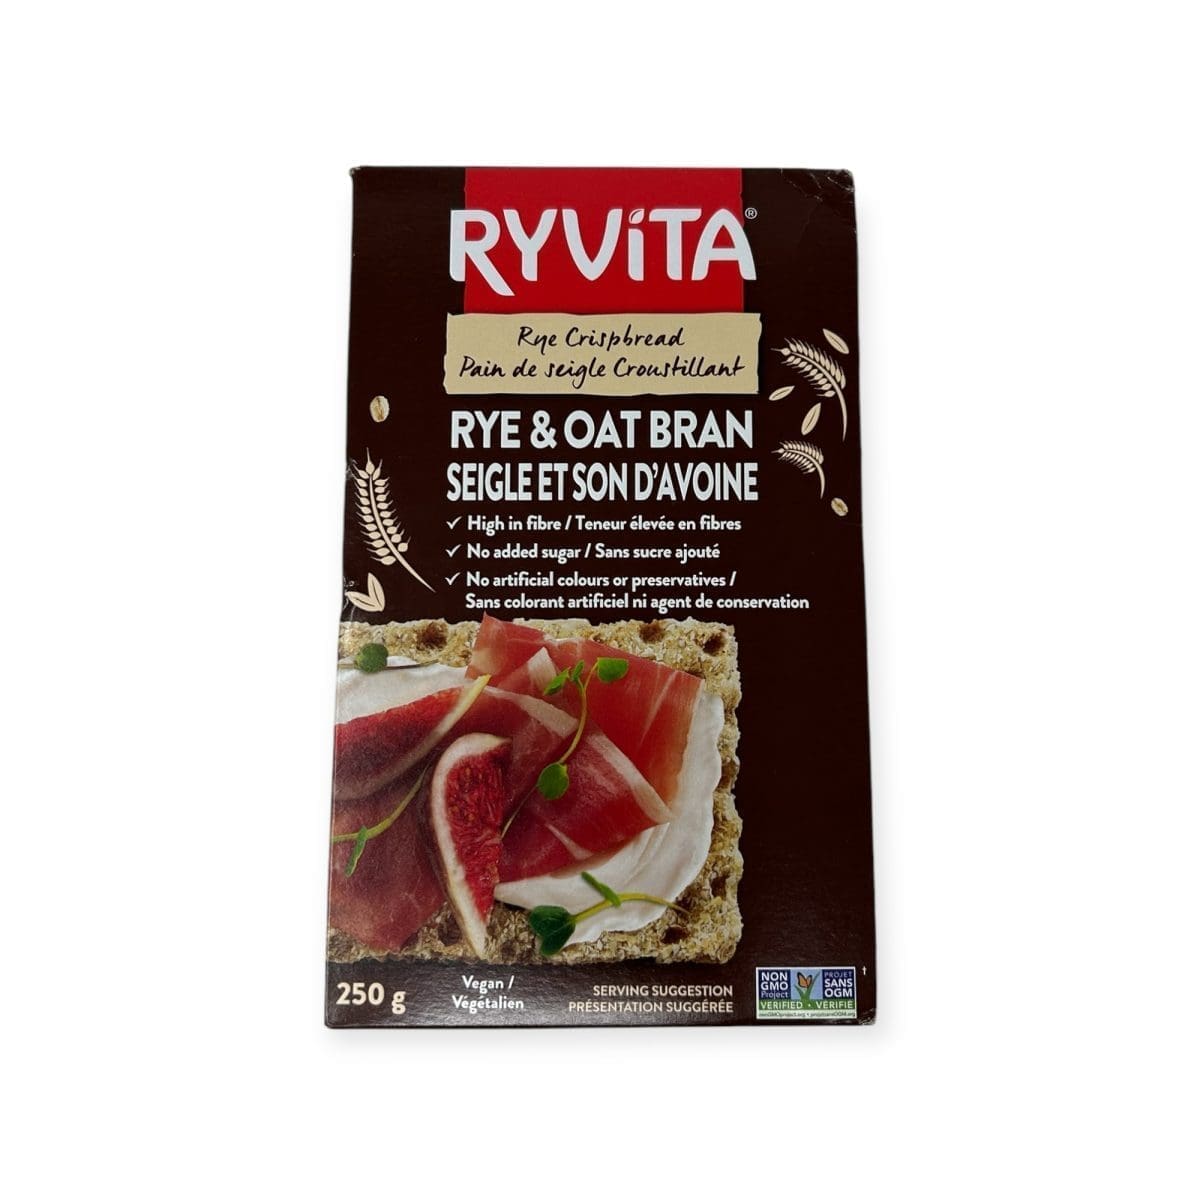 Ryvita Rye Crispbread Rye & Oat Bran (250g)